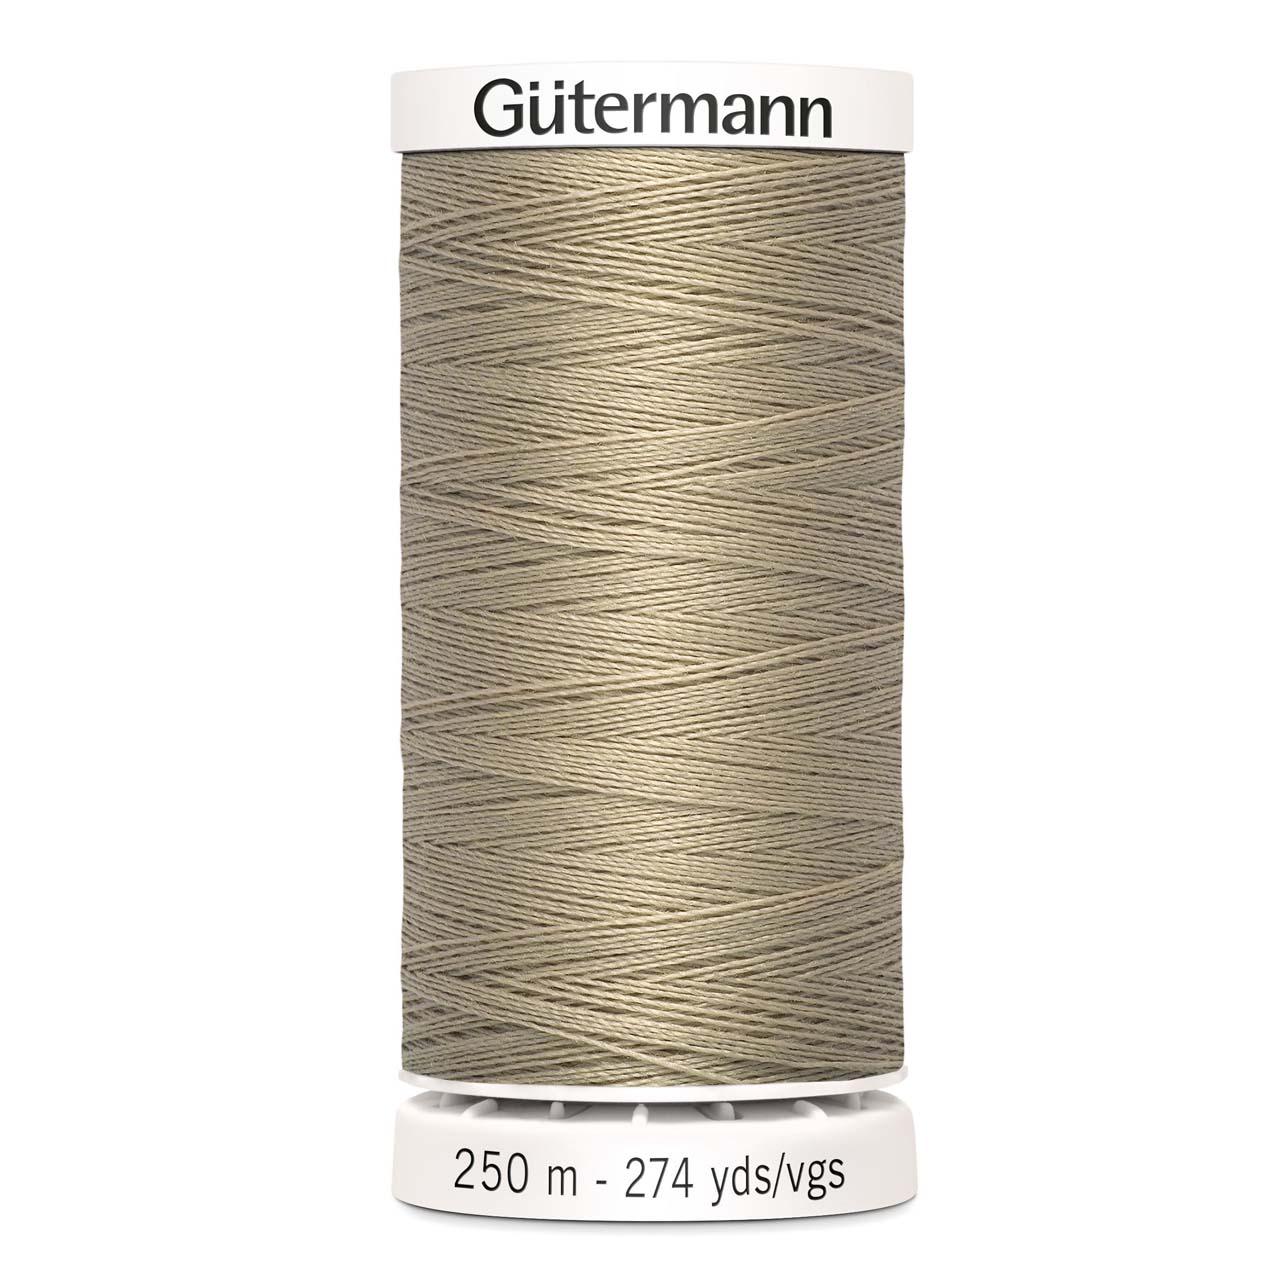 Gutermann thread 215 sewing thread 250 metres